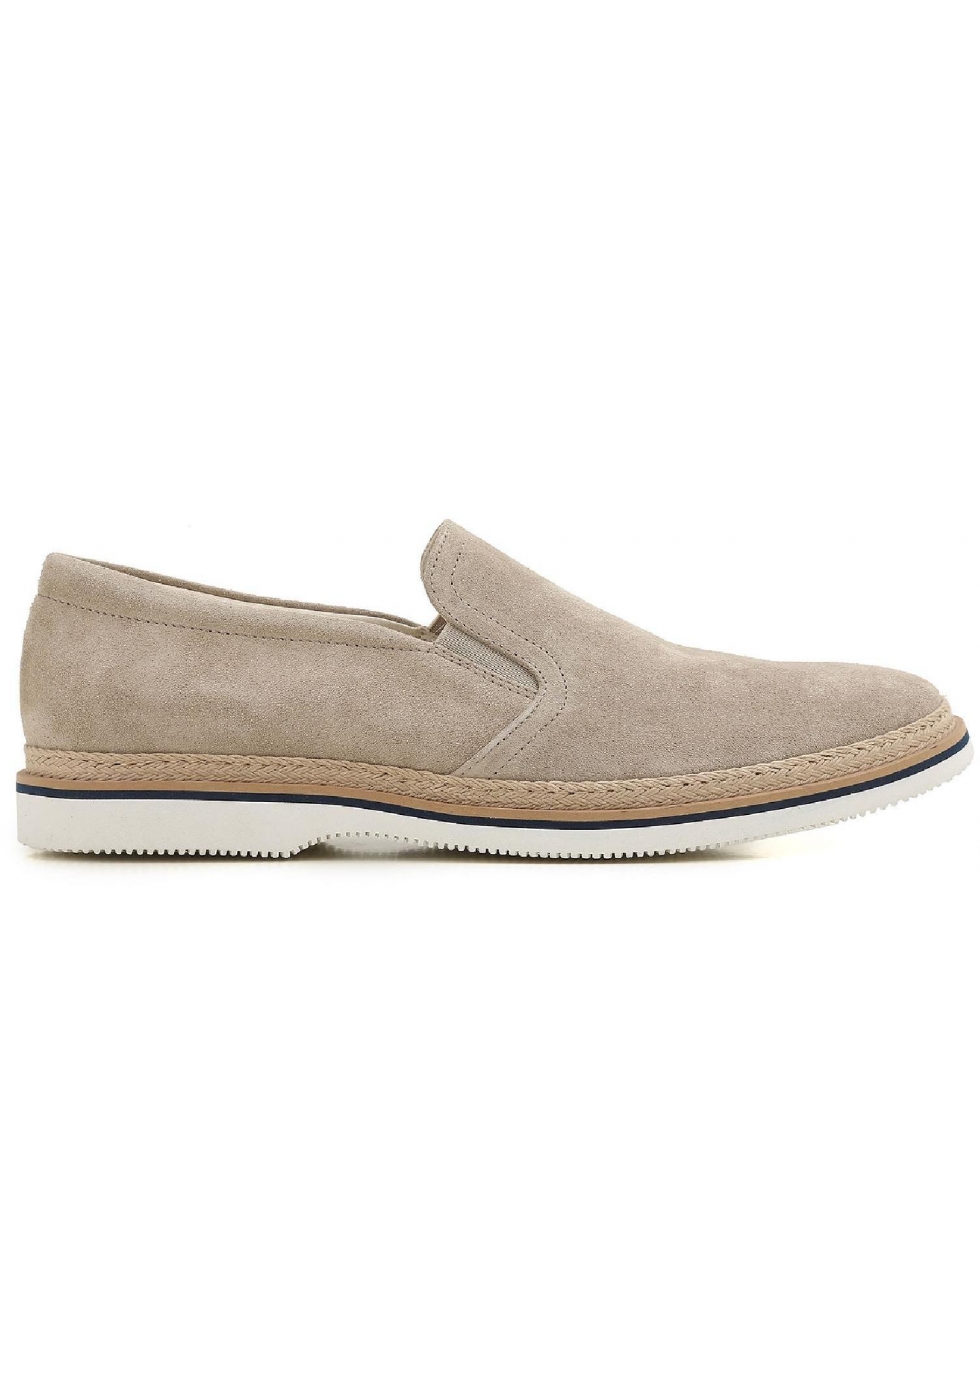 Hogan men's slip-ons loafers shoes in beige suede - Italian Boutique